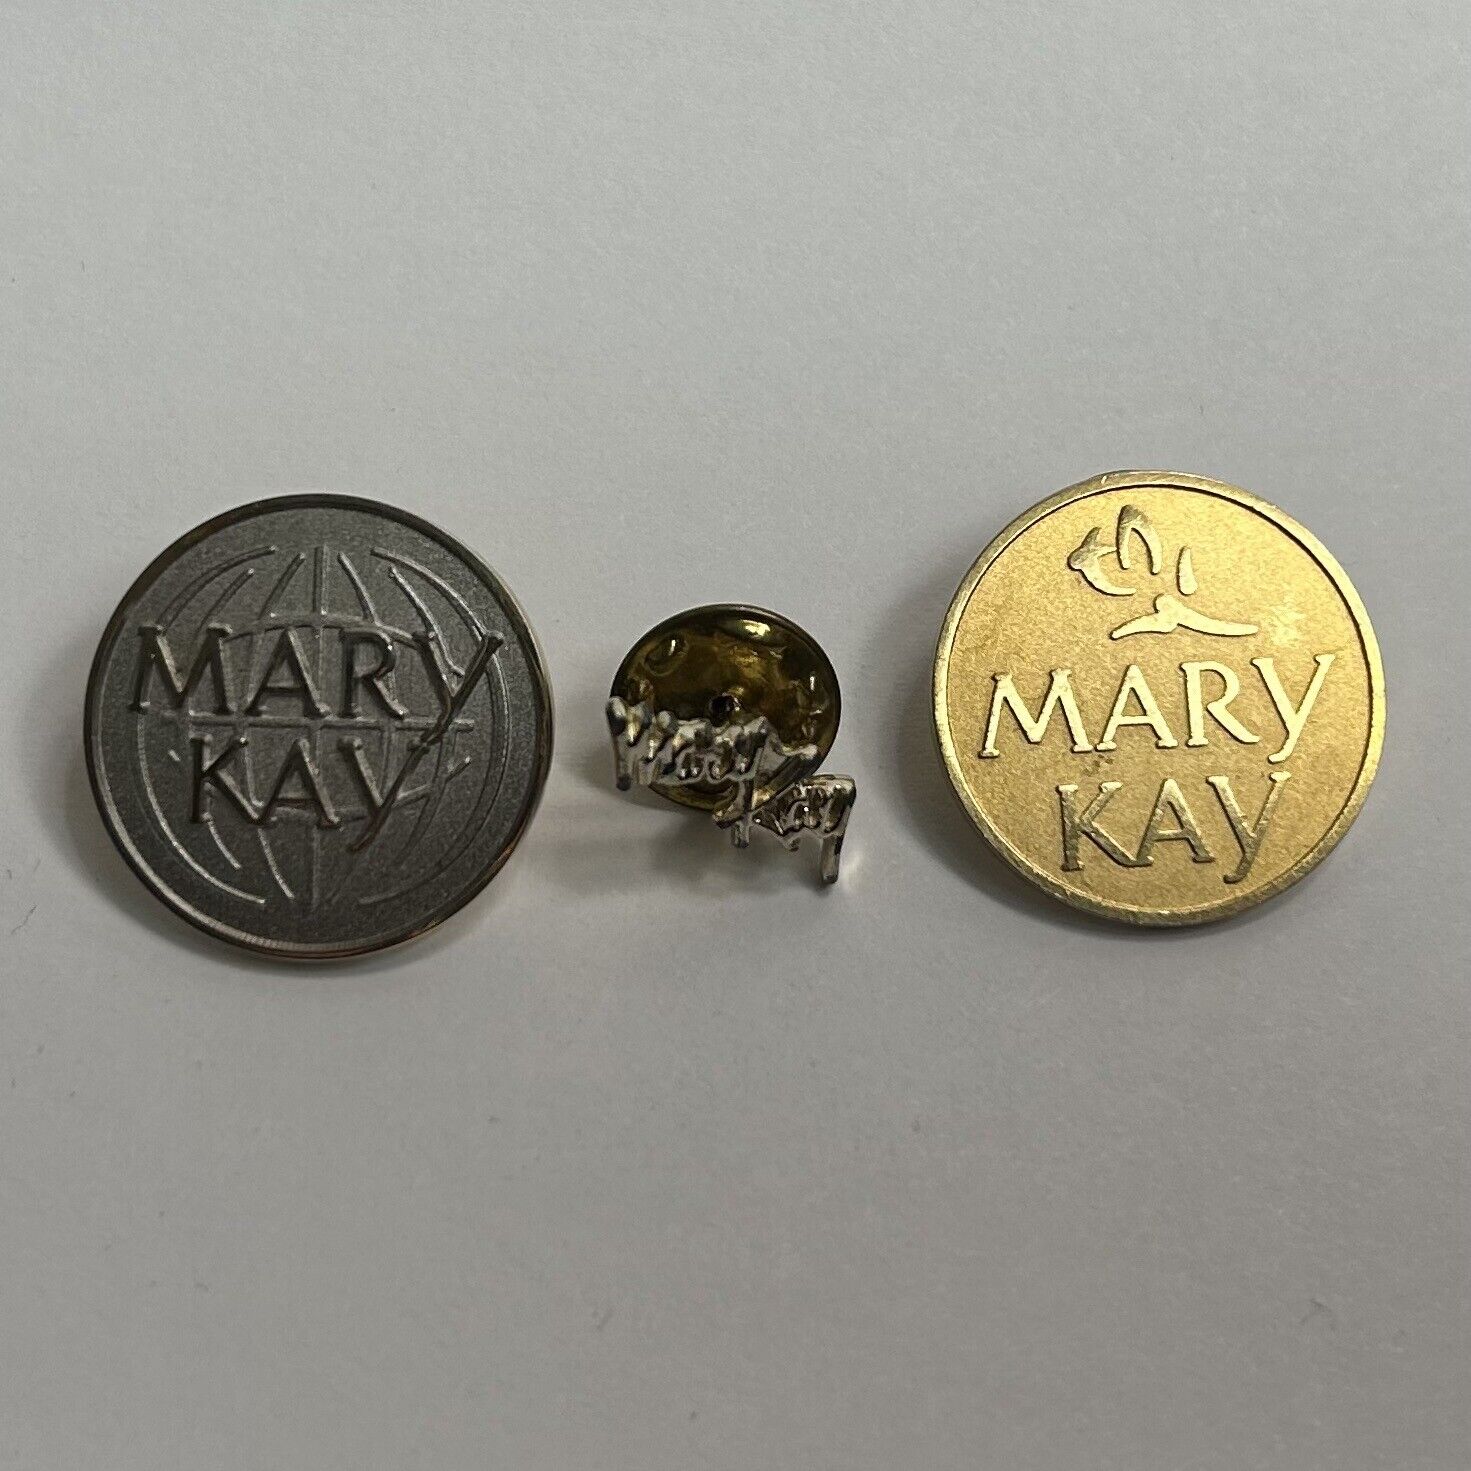 Vintage Mary Kay Lapel Pin - Lot Of 3